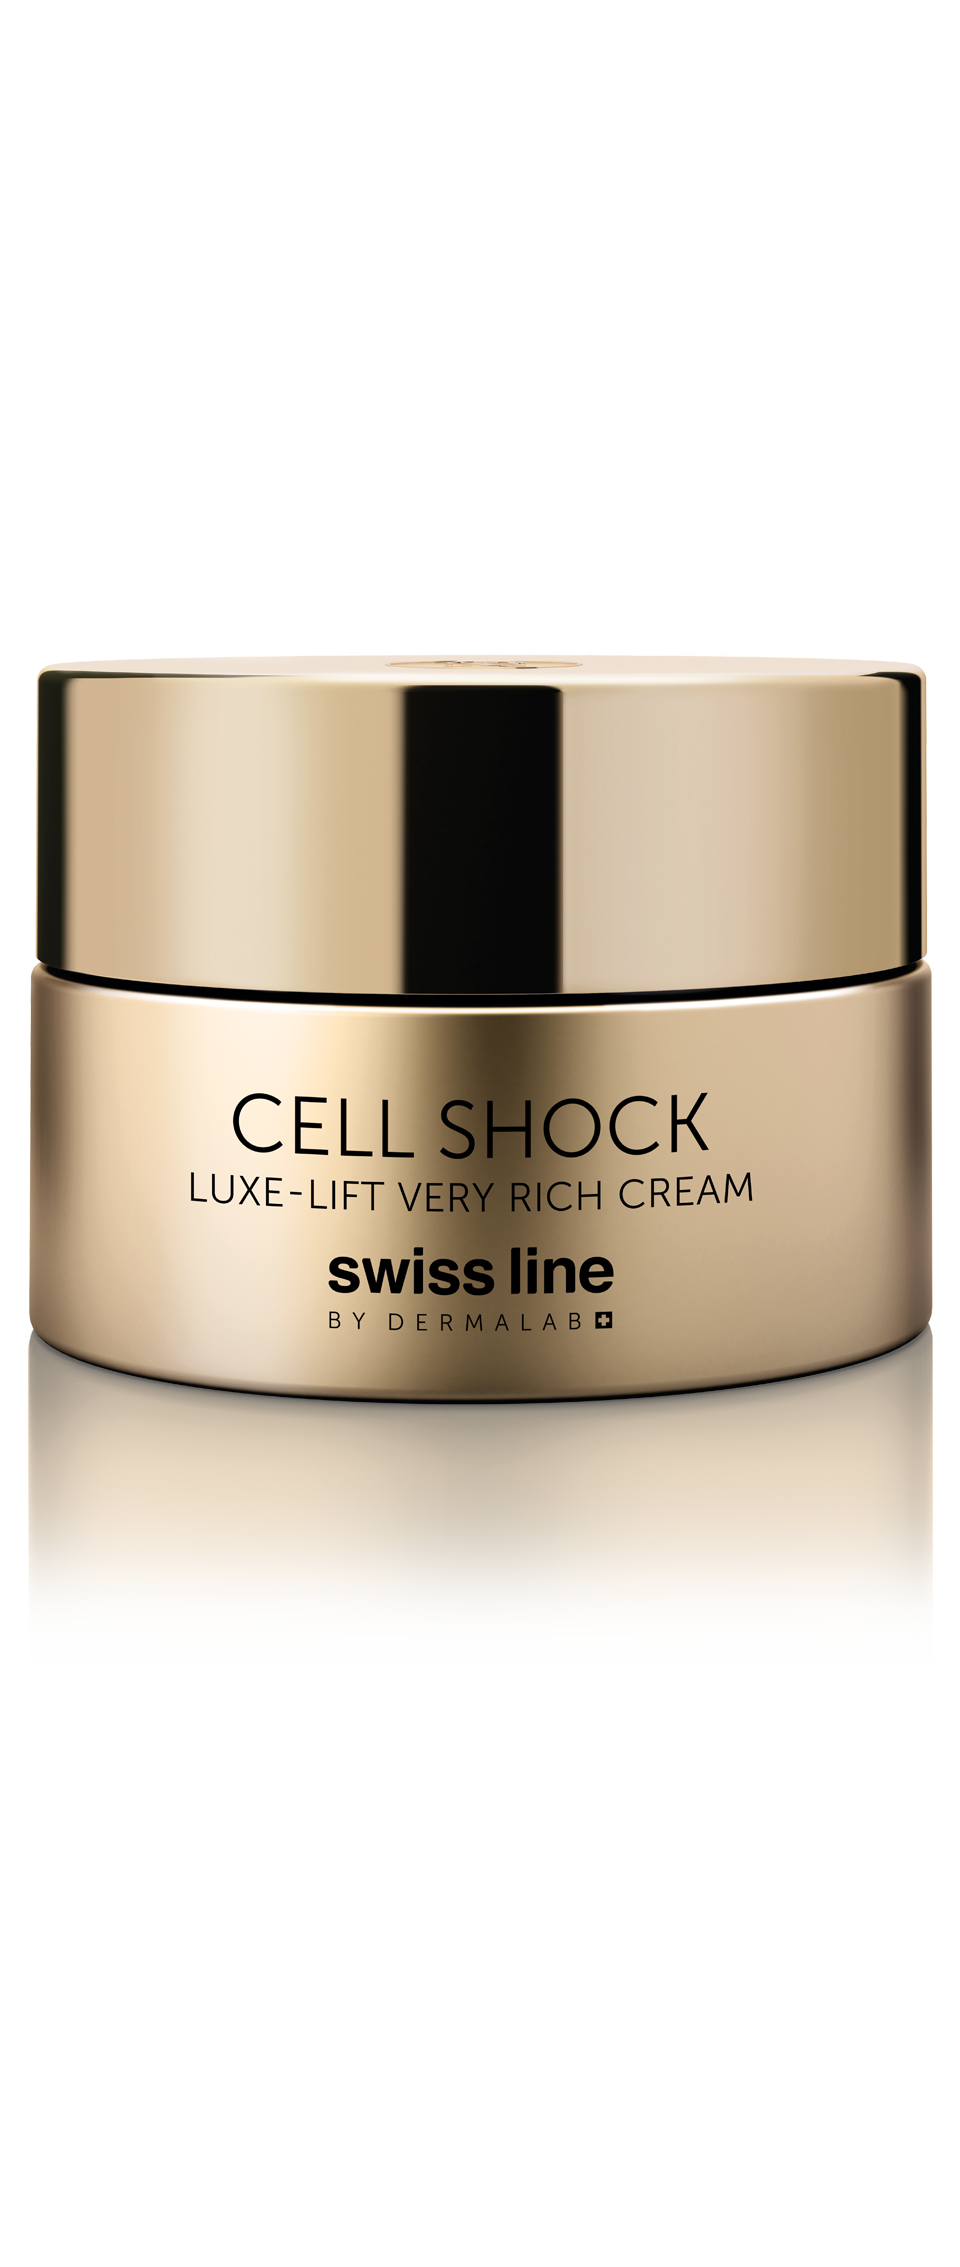 SWISSLINE CELL SHOCK Luxe-Lift Very Rich Cream 50ml